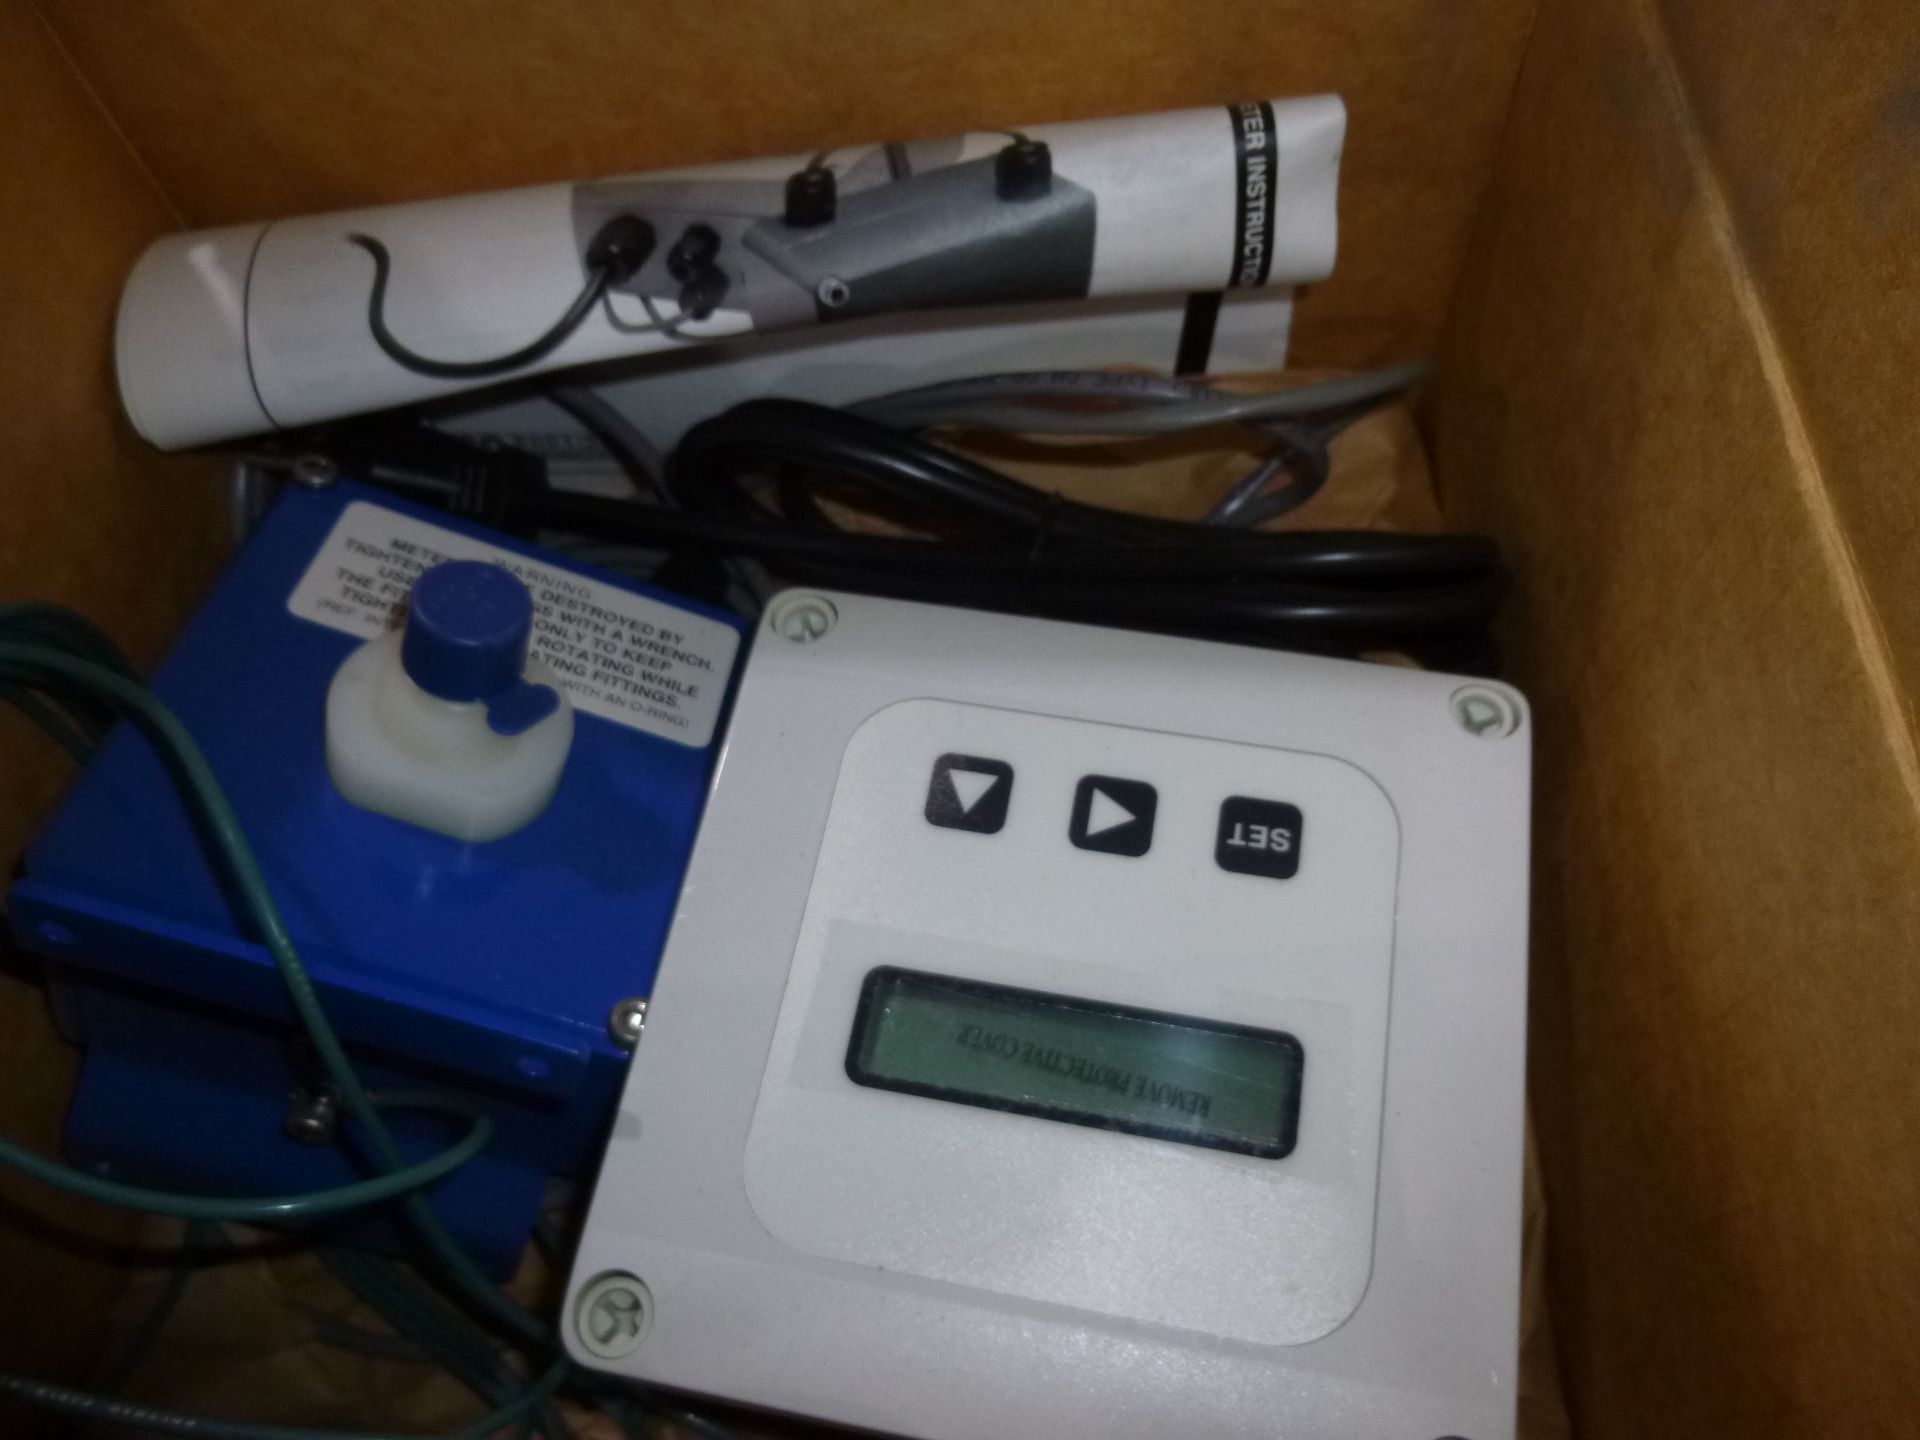 SeaMetrics Model EM101PT-038-48 electromagnetic flowmeter, new in box, as always with Brolyn LLC - Image 2 of 3